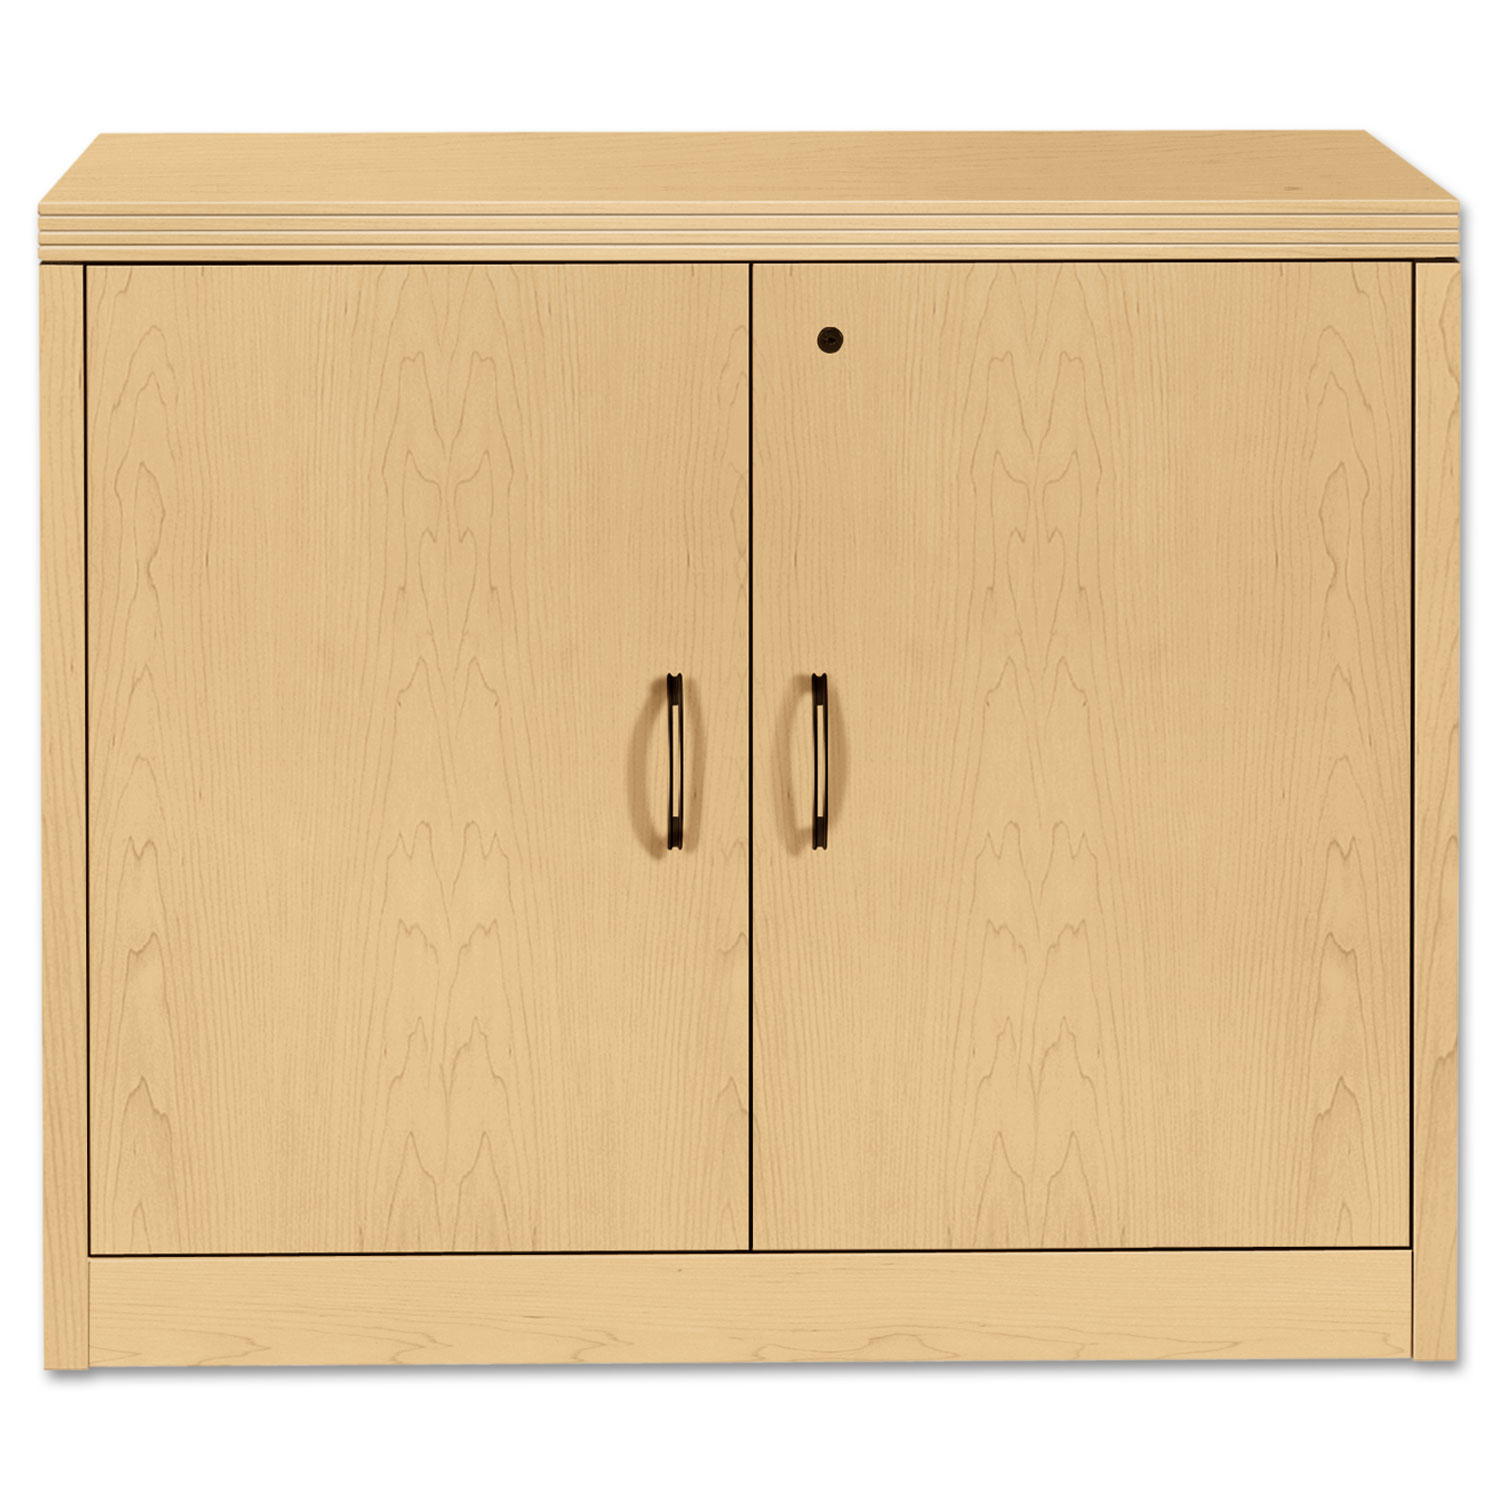 11500 Series Valido Storage Cabinet w/Doors, 36w x 20d x 29-1/2h, Natural Maple